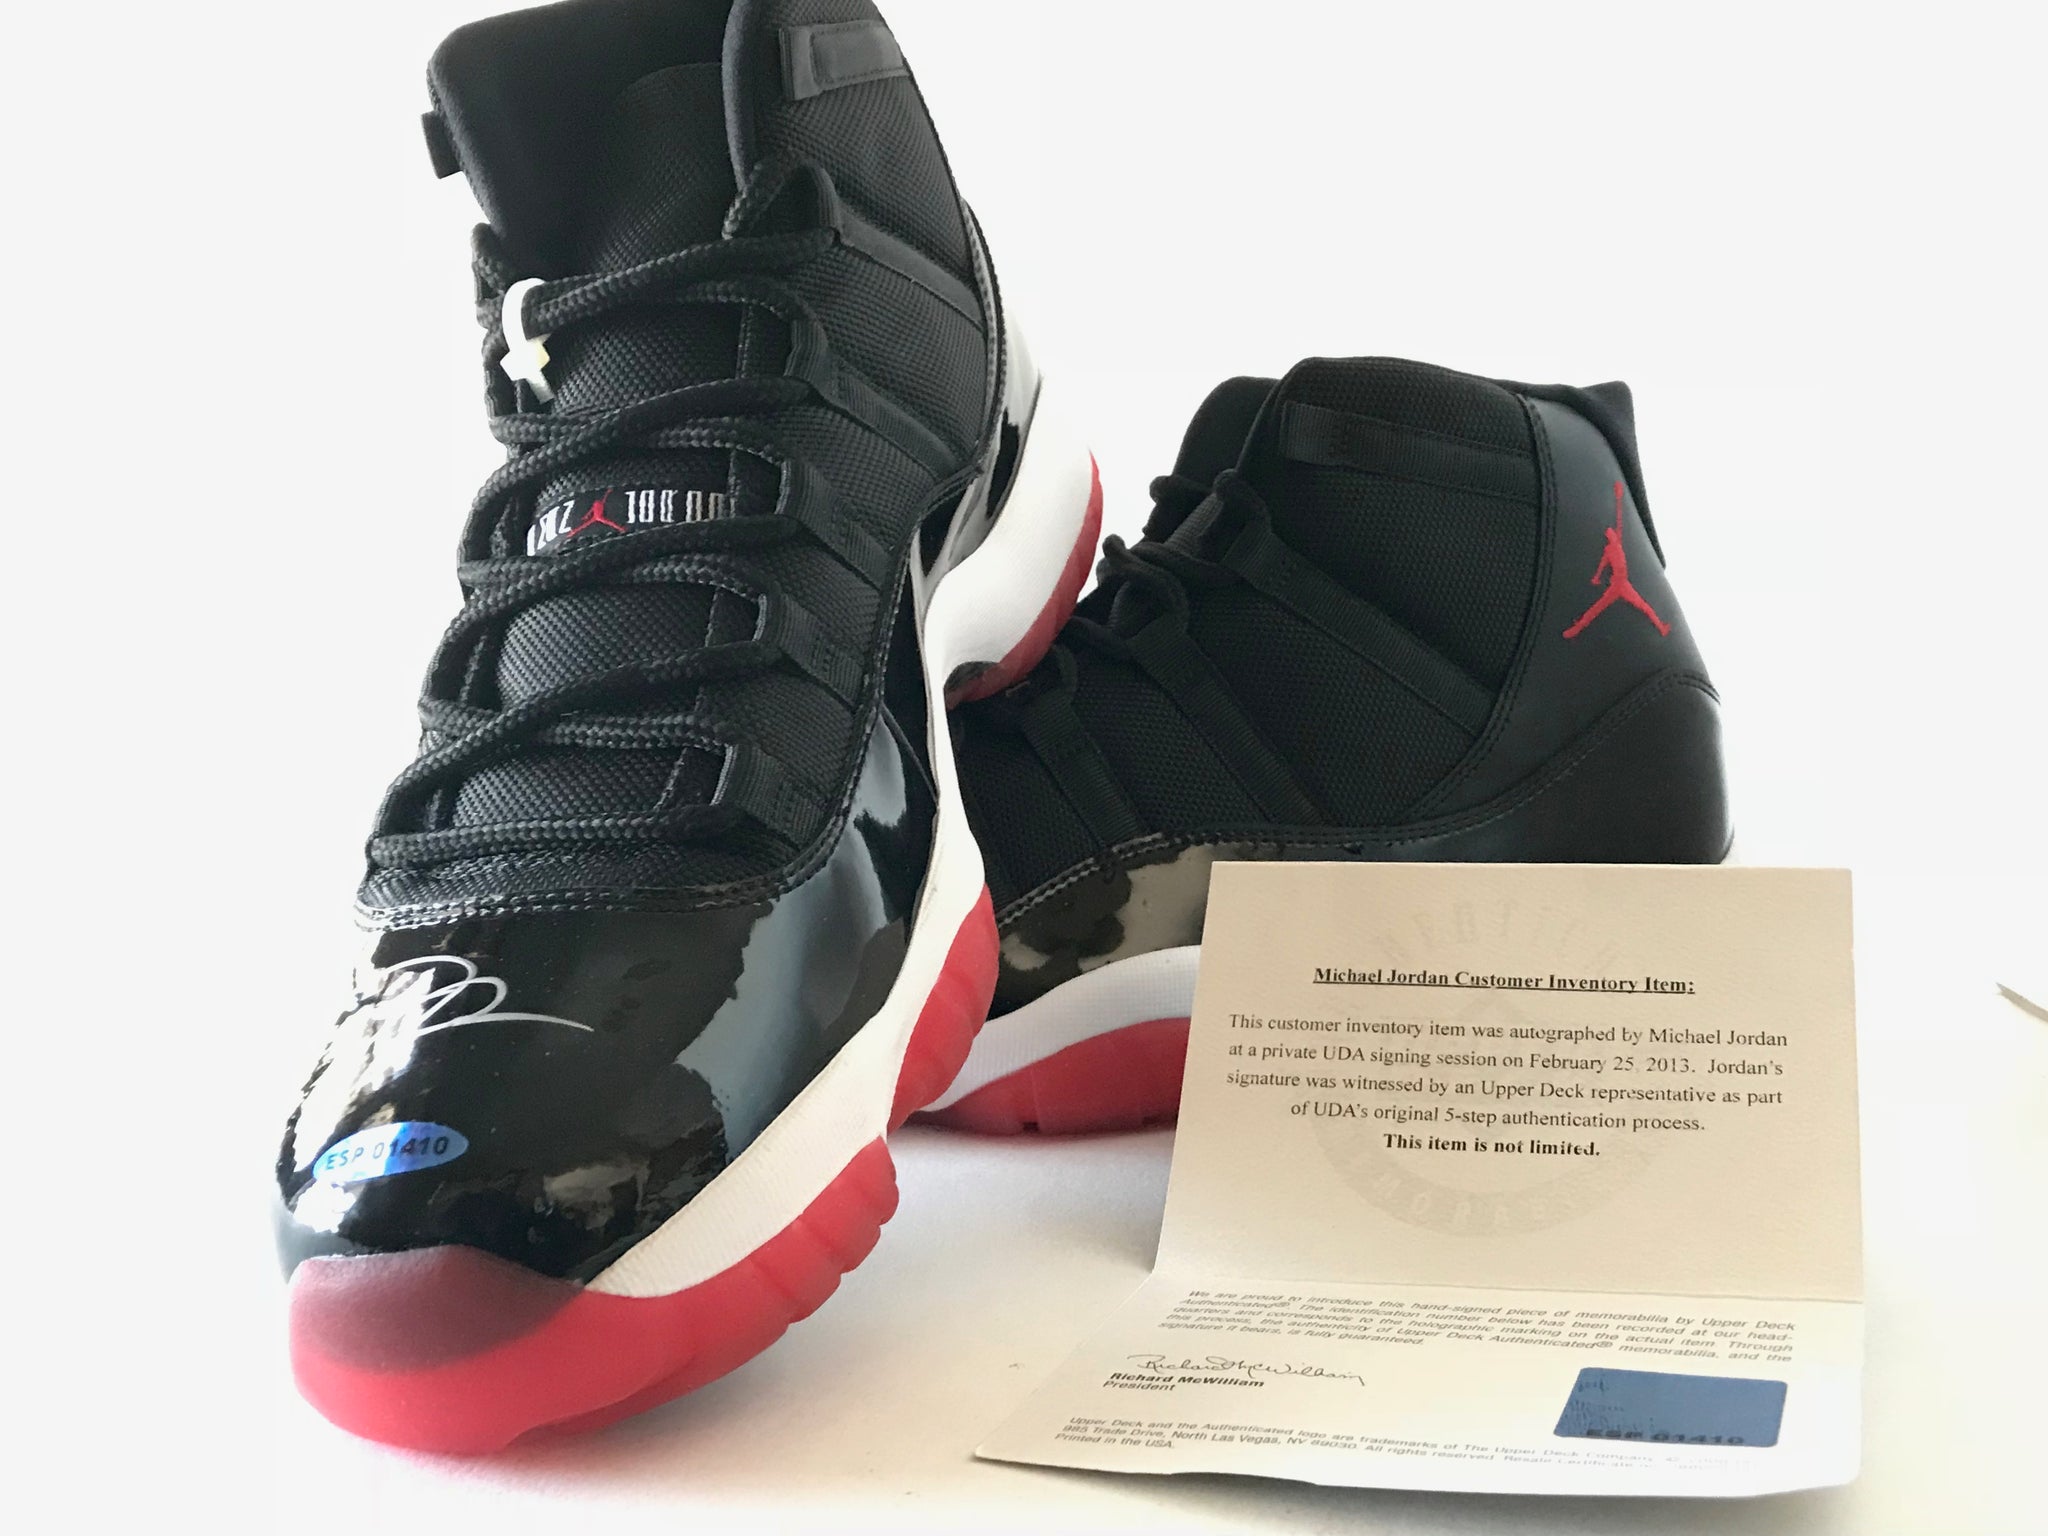 Michael Jordan Autographed Nike Air Jordan 11 Retro Bred 2019 Shoes